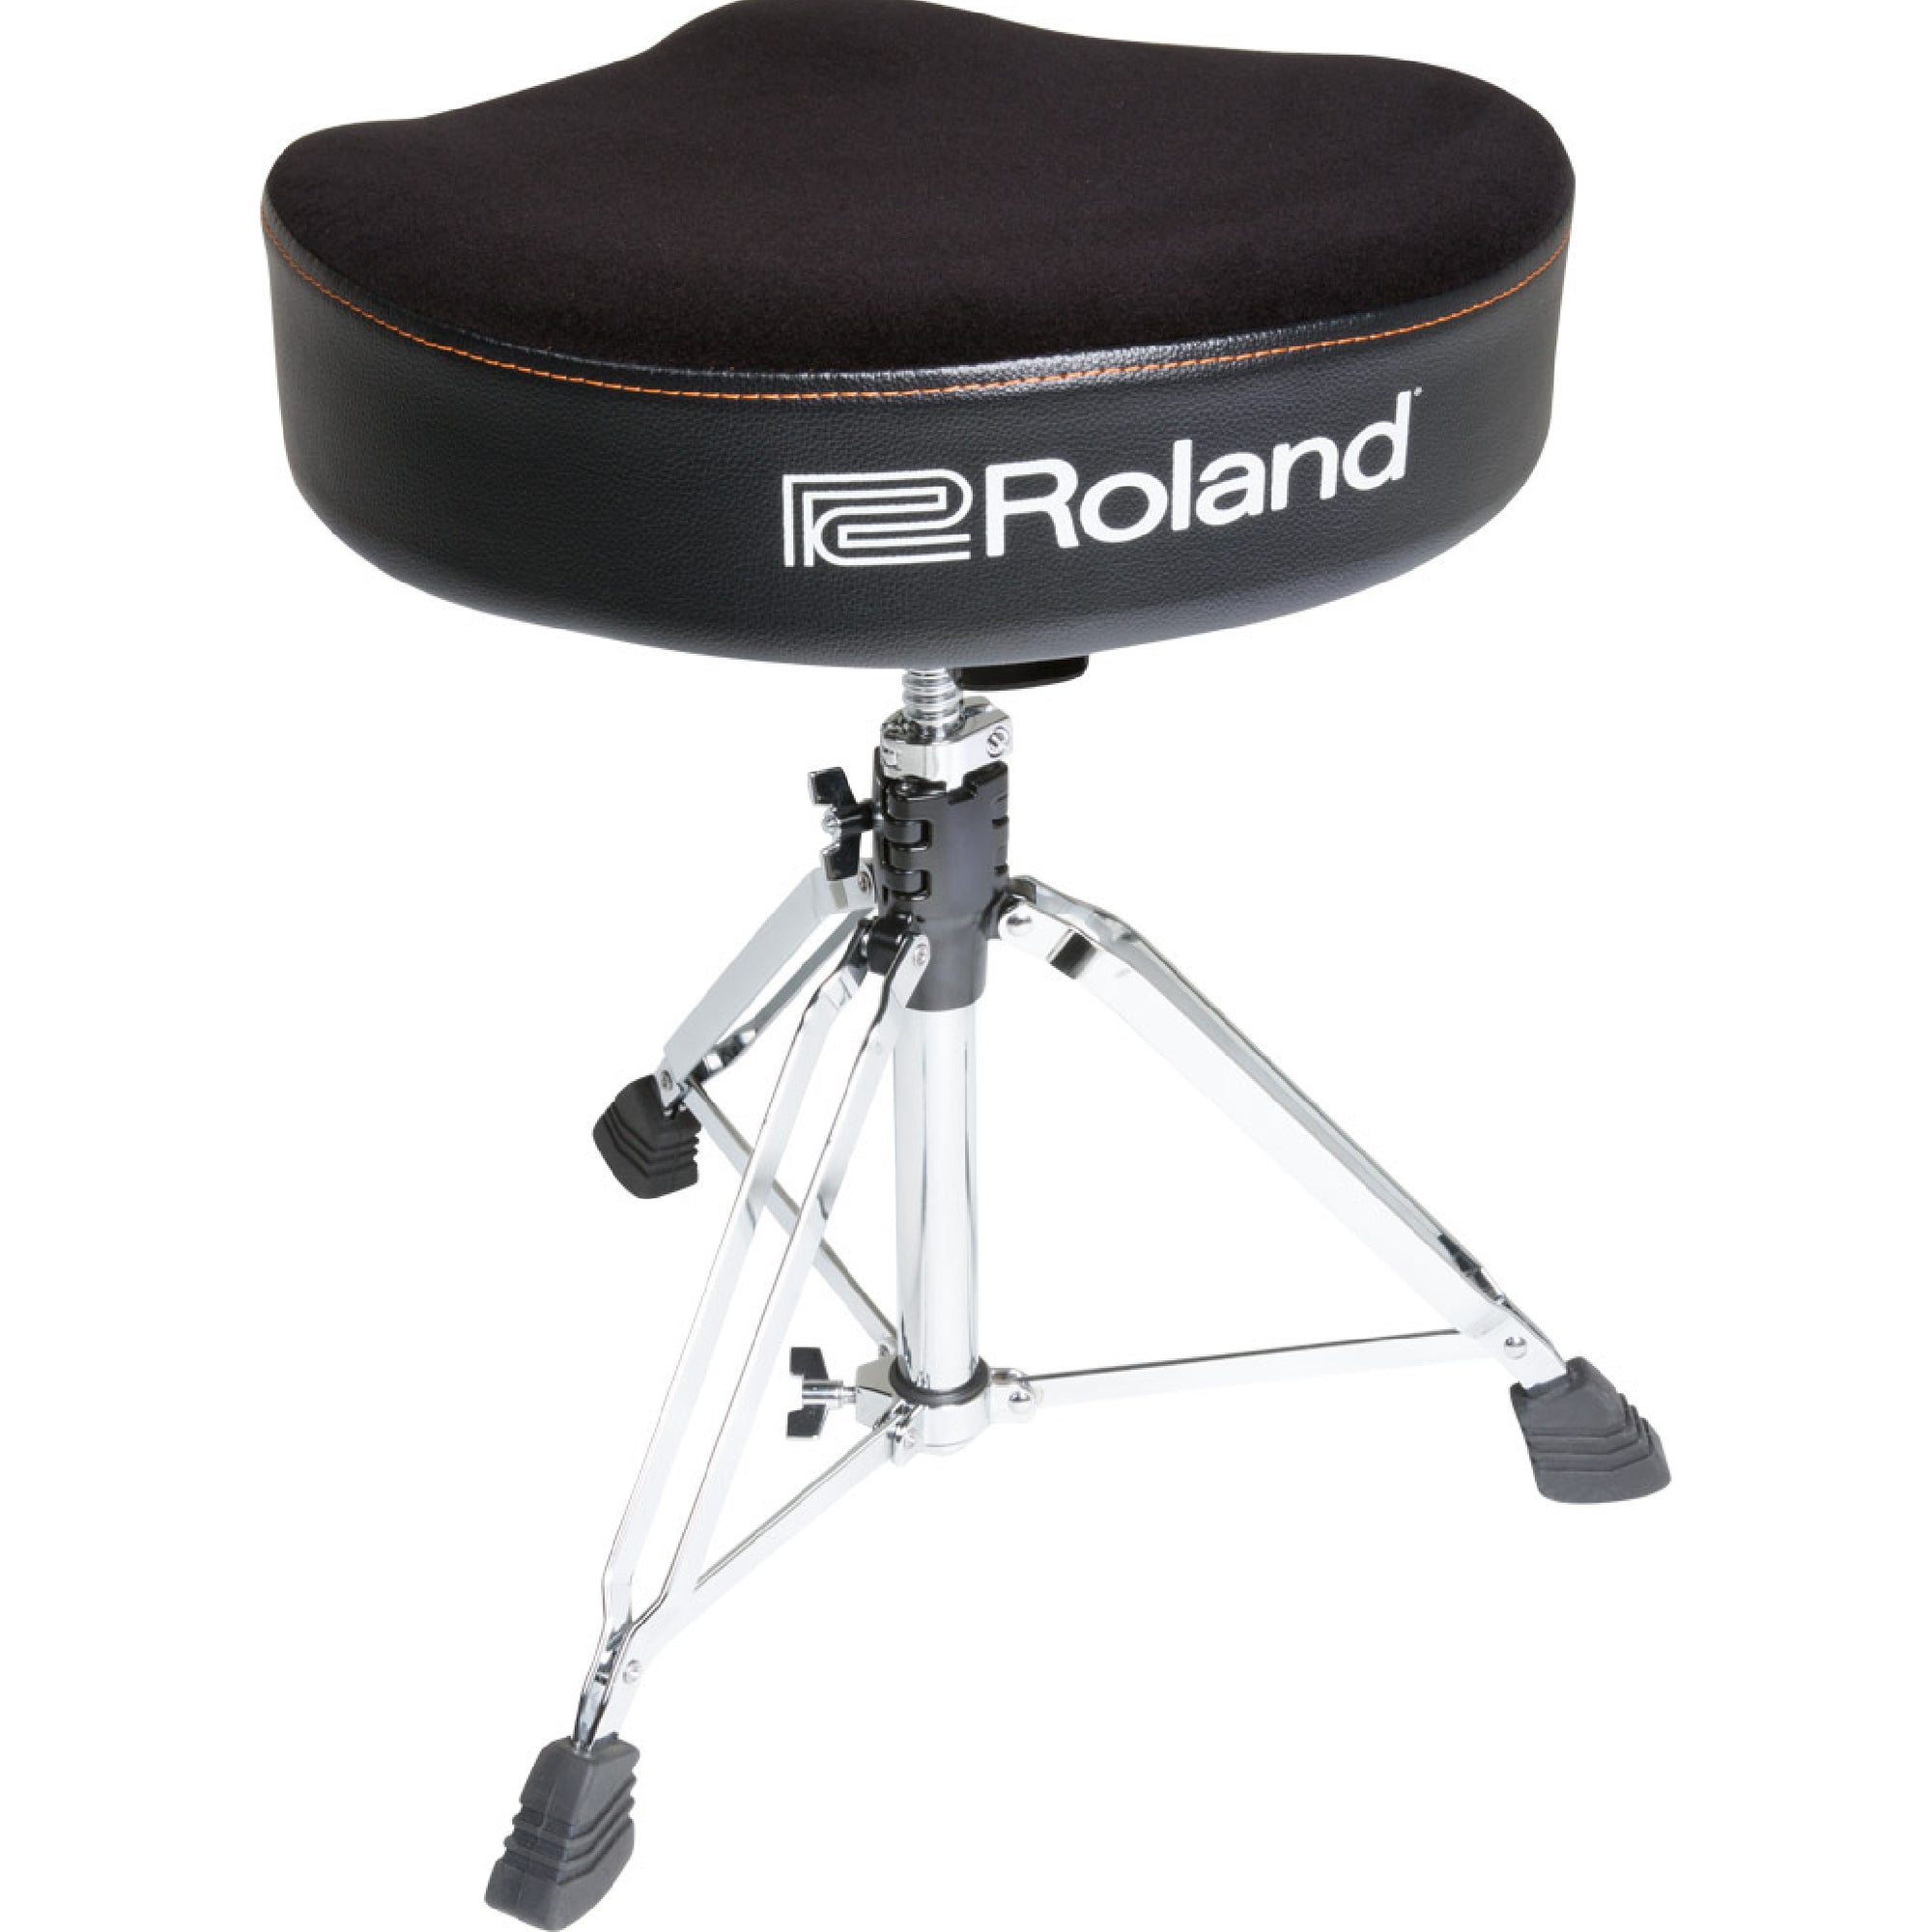 Roland RDT-S Saddle Drum Throne